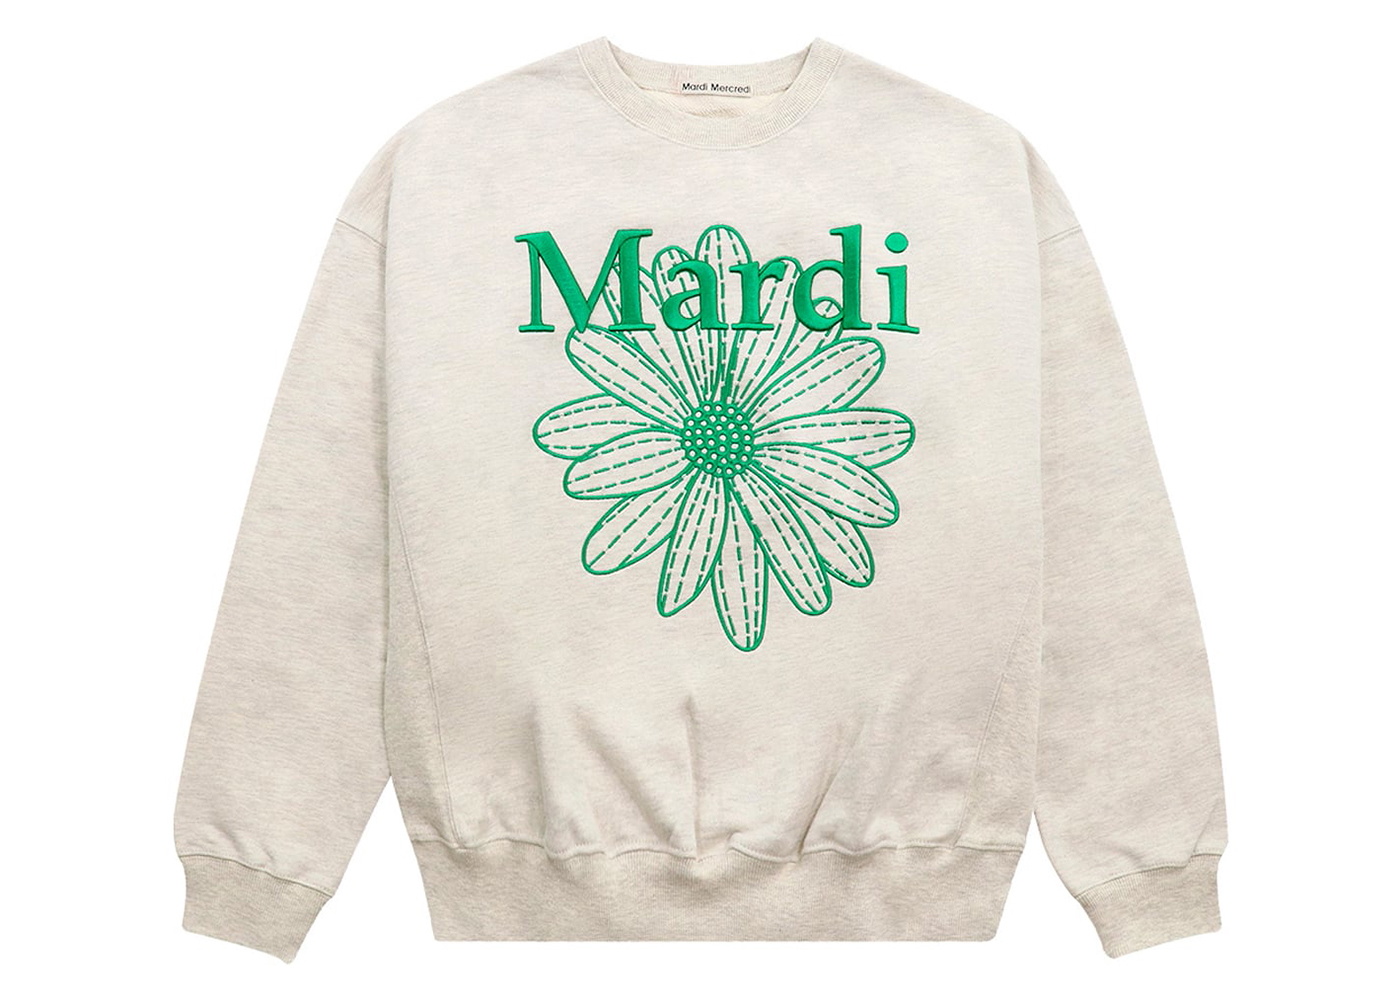 Mardi Mercredi Flower Sweatshirt Navy/Violet - FW23 - US